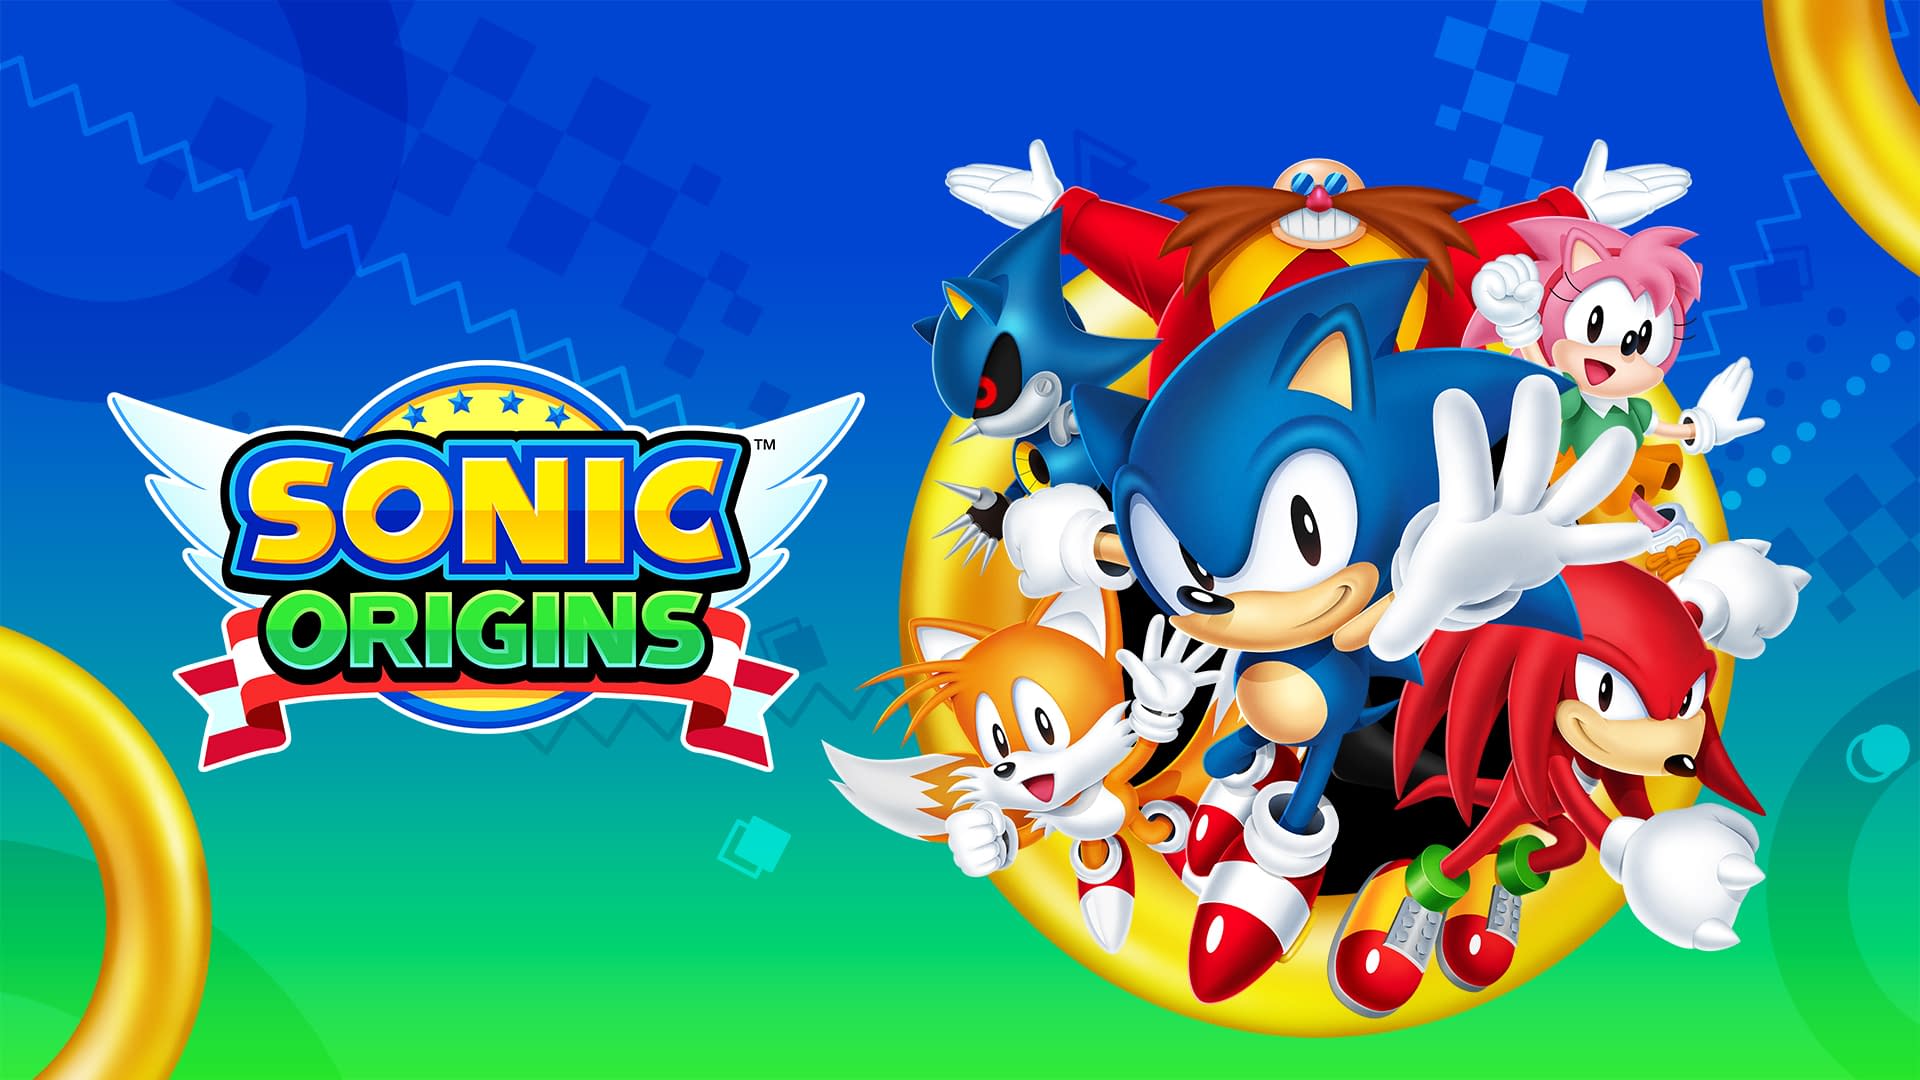 Sonic origins cutscenes in sonic mobile games by JonasDaniel